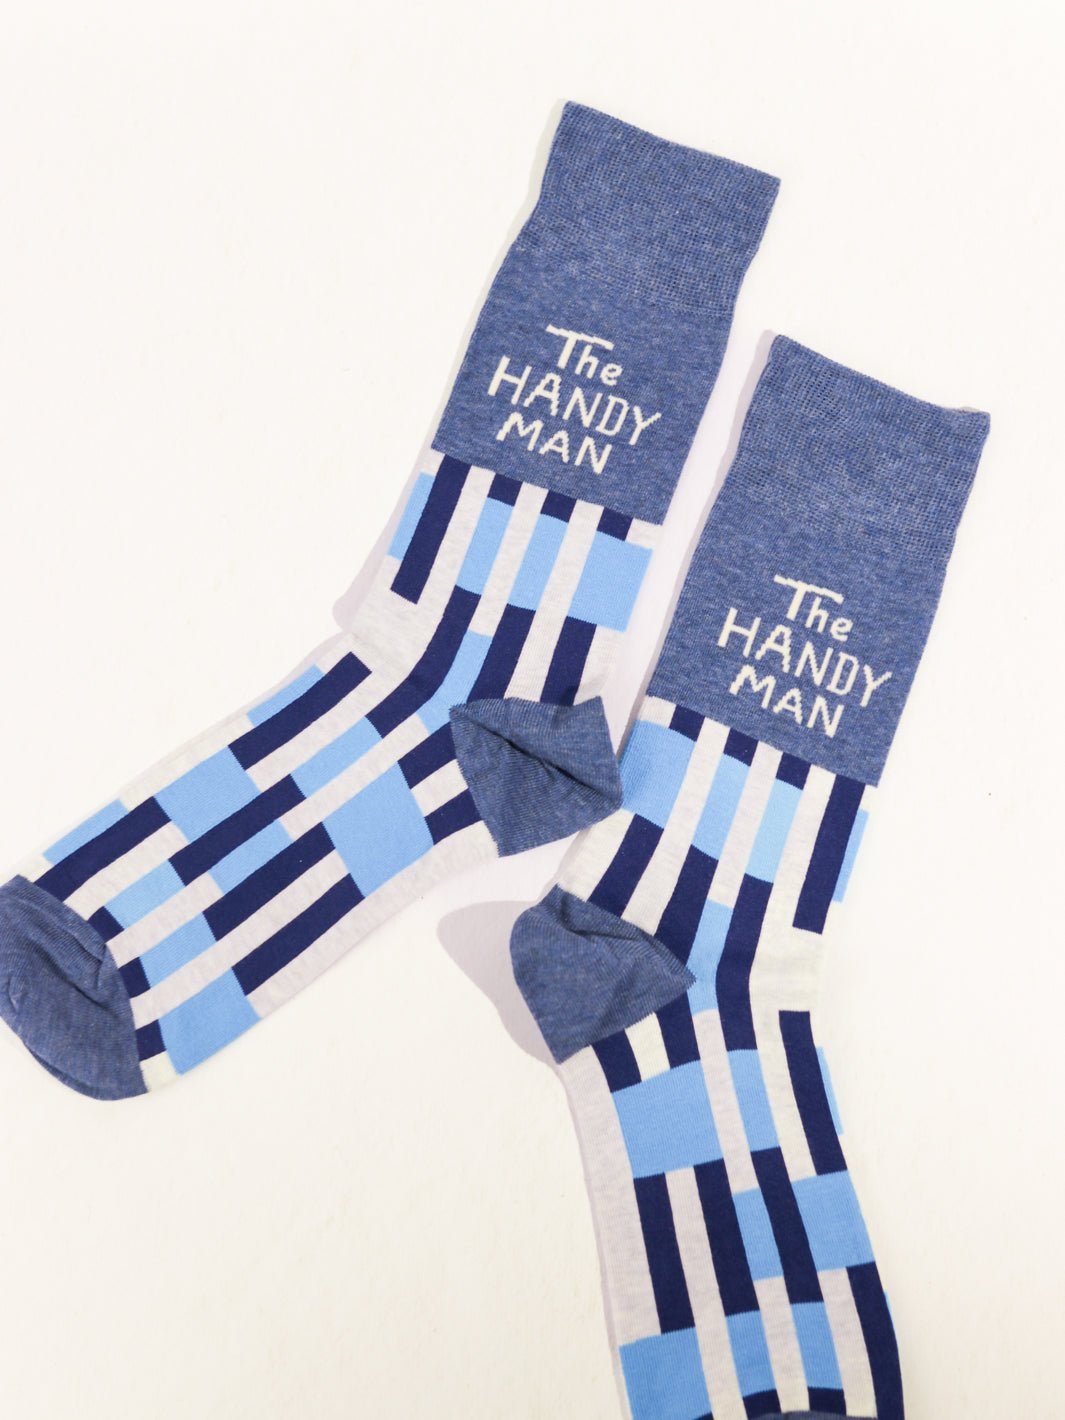 Men's Handyman Socks - Heyday